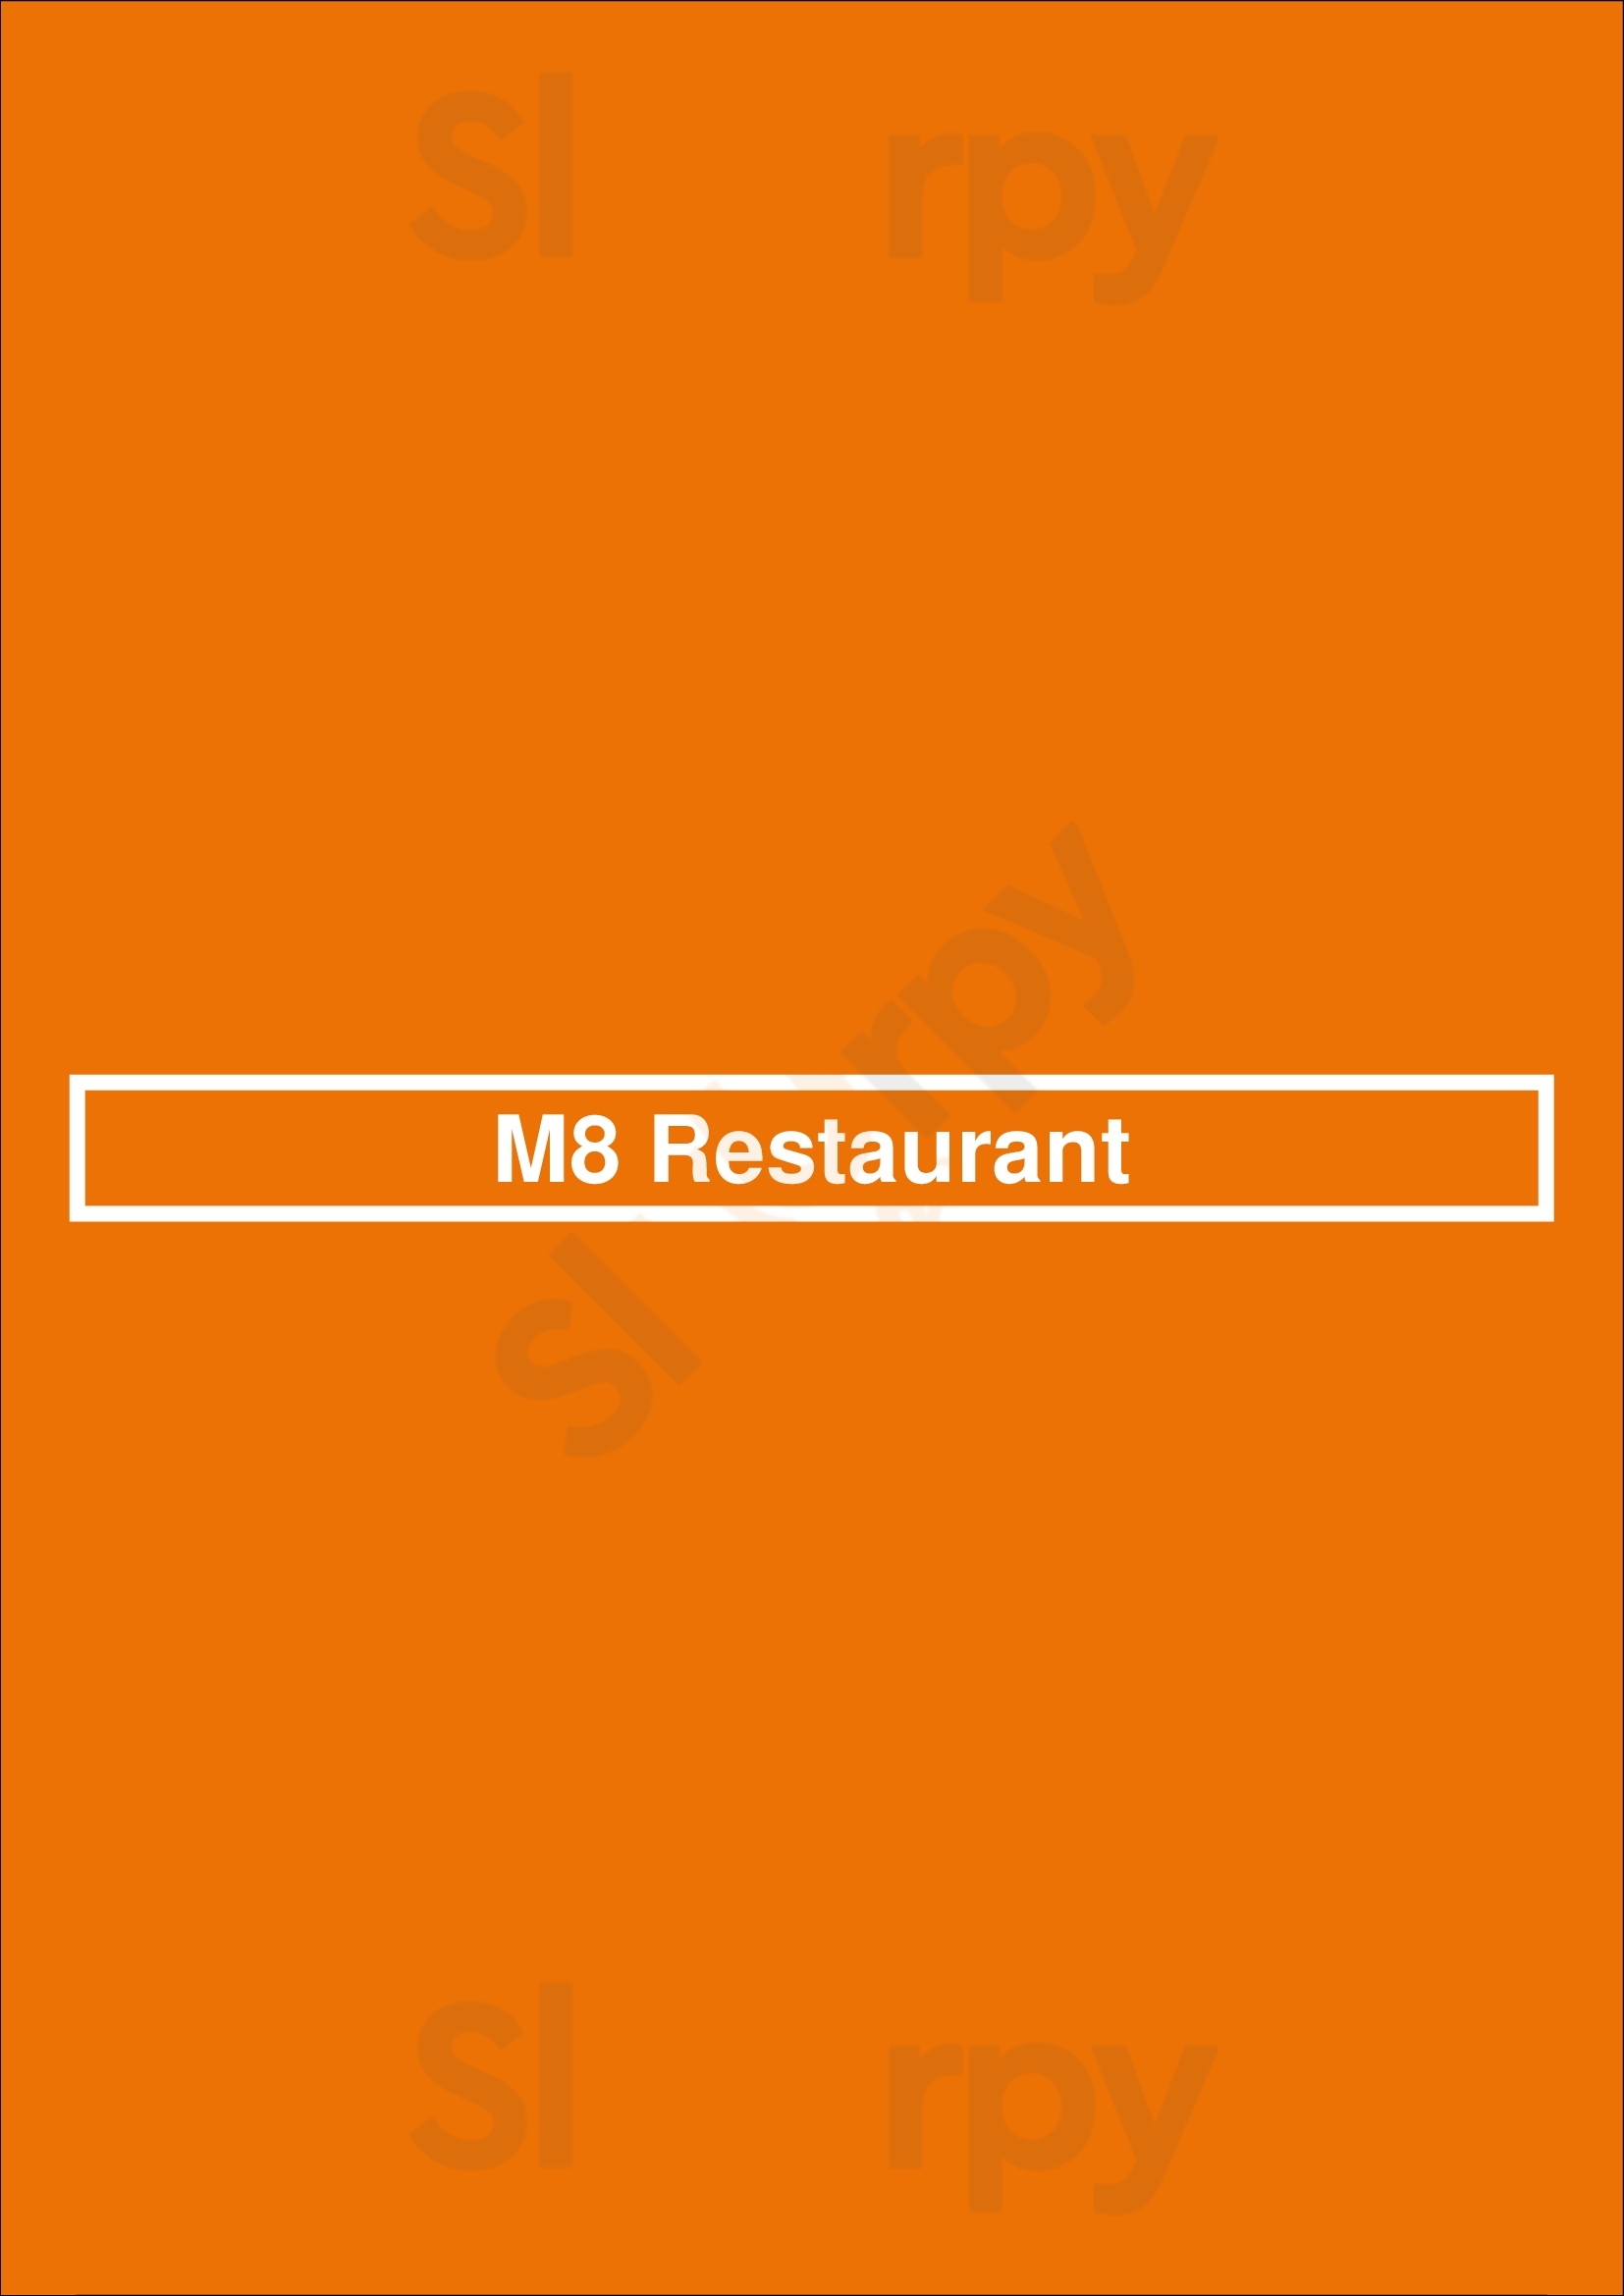 M8 Restaurant Vancouver Menu - 1